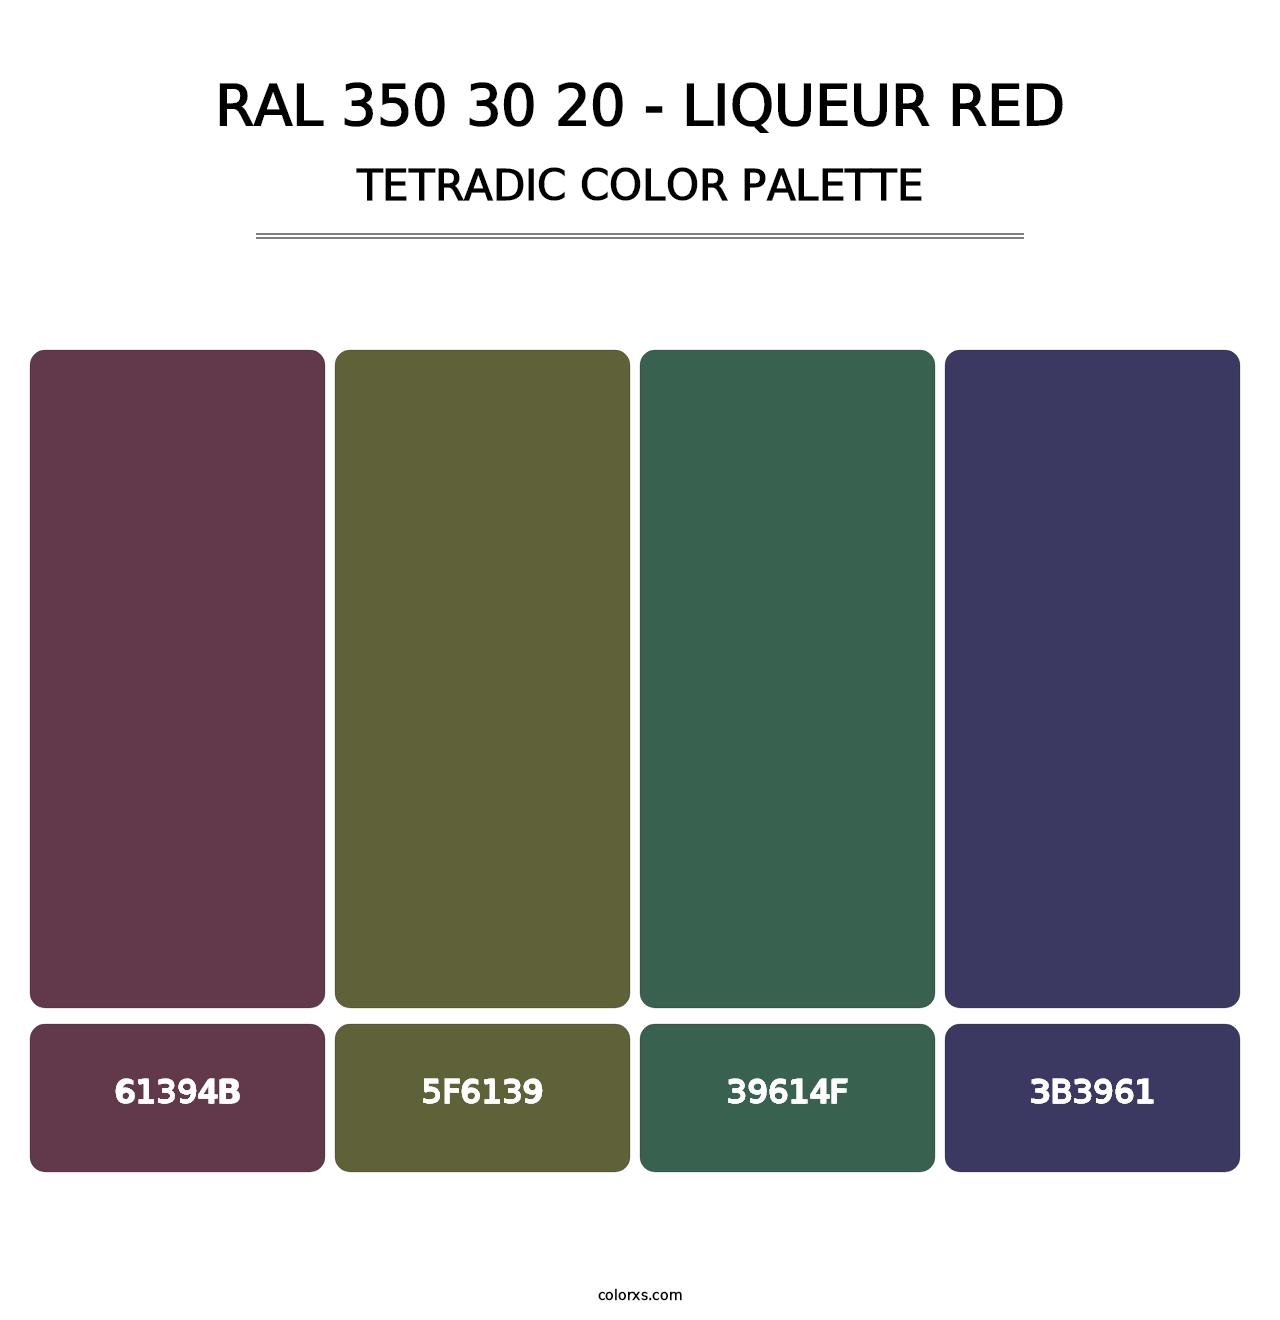 RAL 350 30 20 - Liqueur Red - Tetradic Color Palette